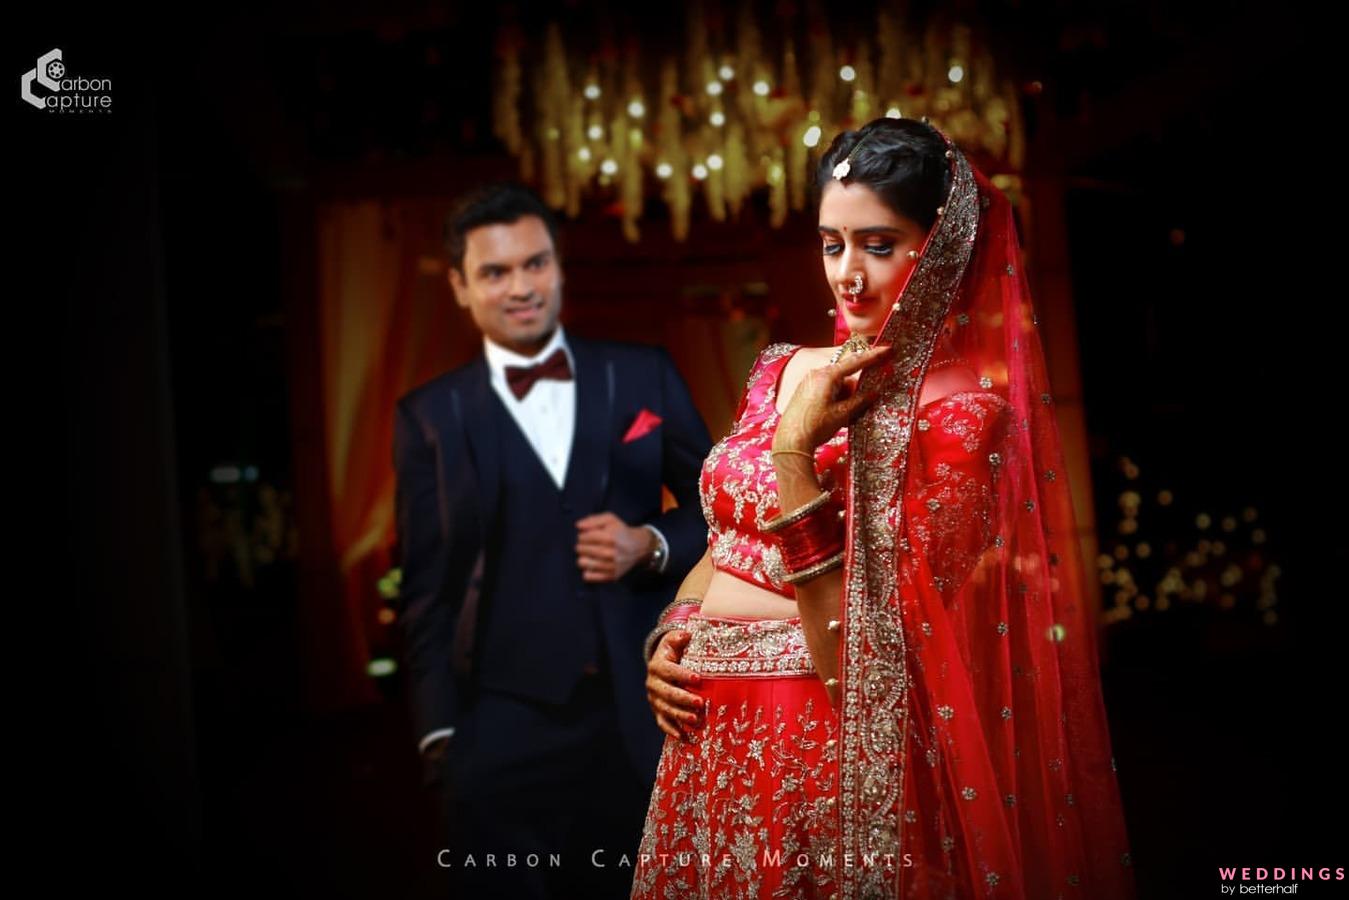 Yuga's Women Fashion & Lifestyle | Indian wedding photography poses, Indian  wedding photography, Indian wedding poses